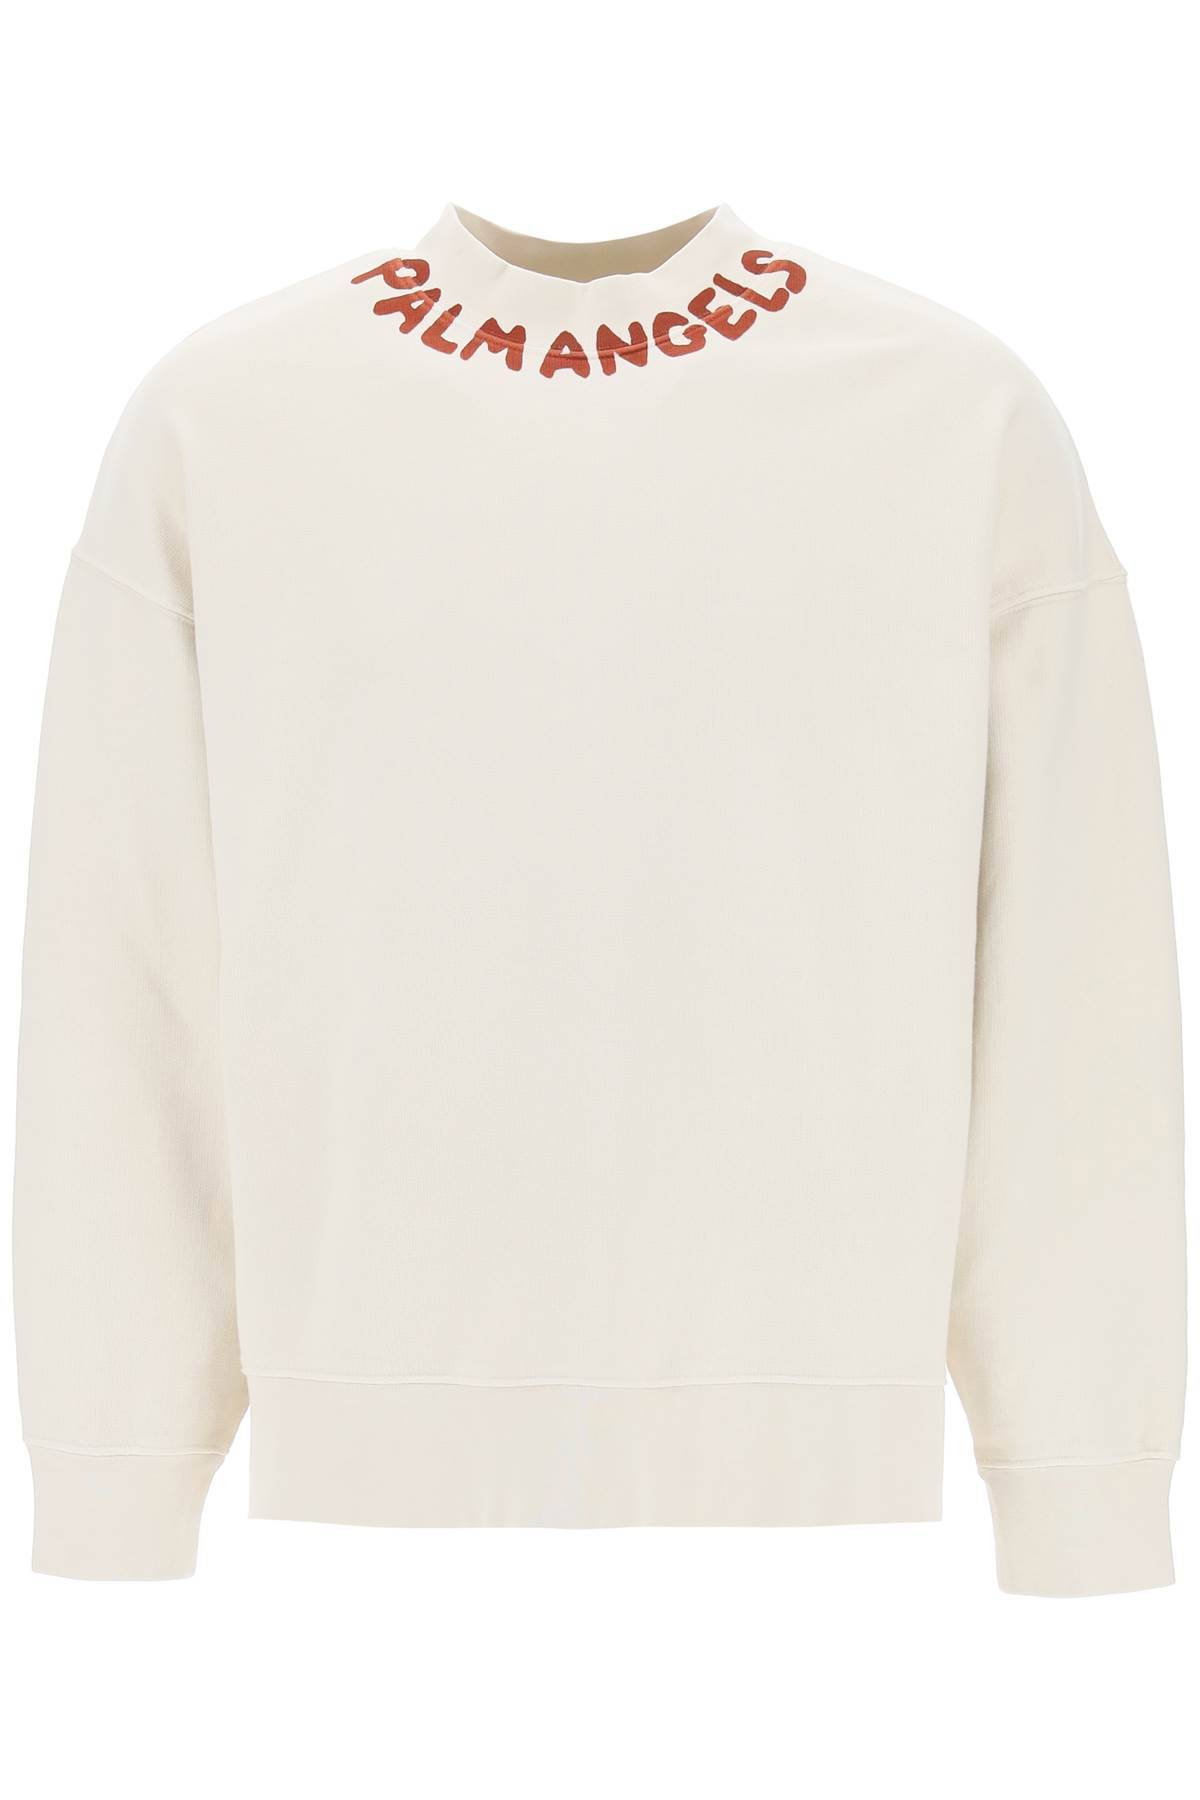 PALM ANGELS PALM ANGELS sweatshirt with